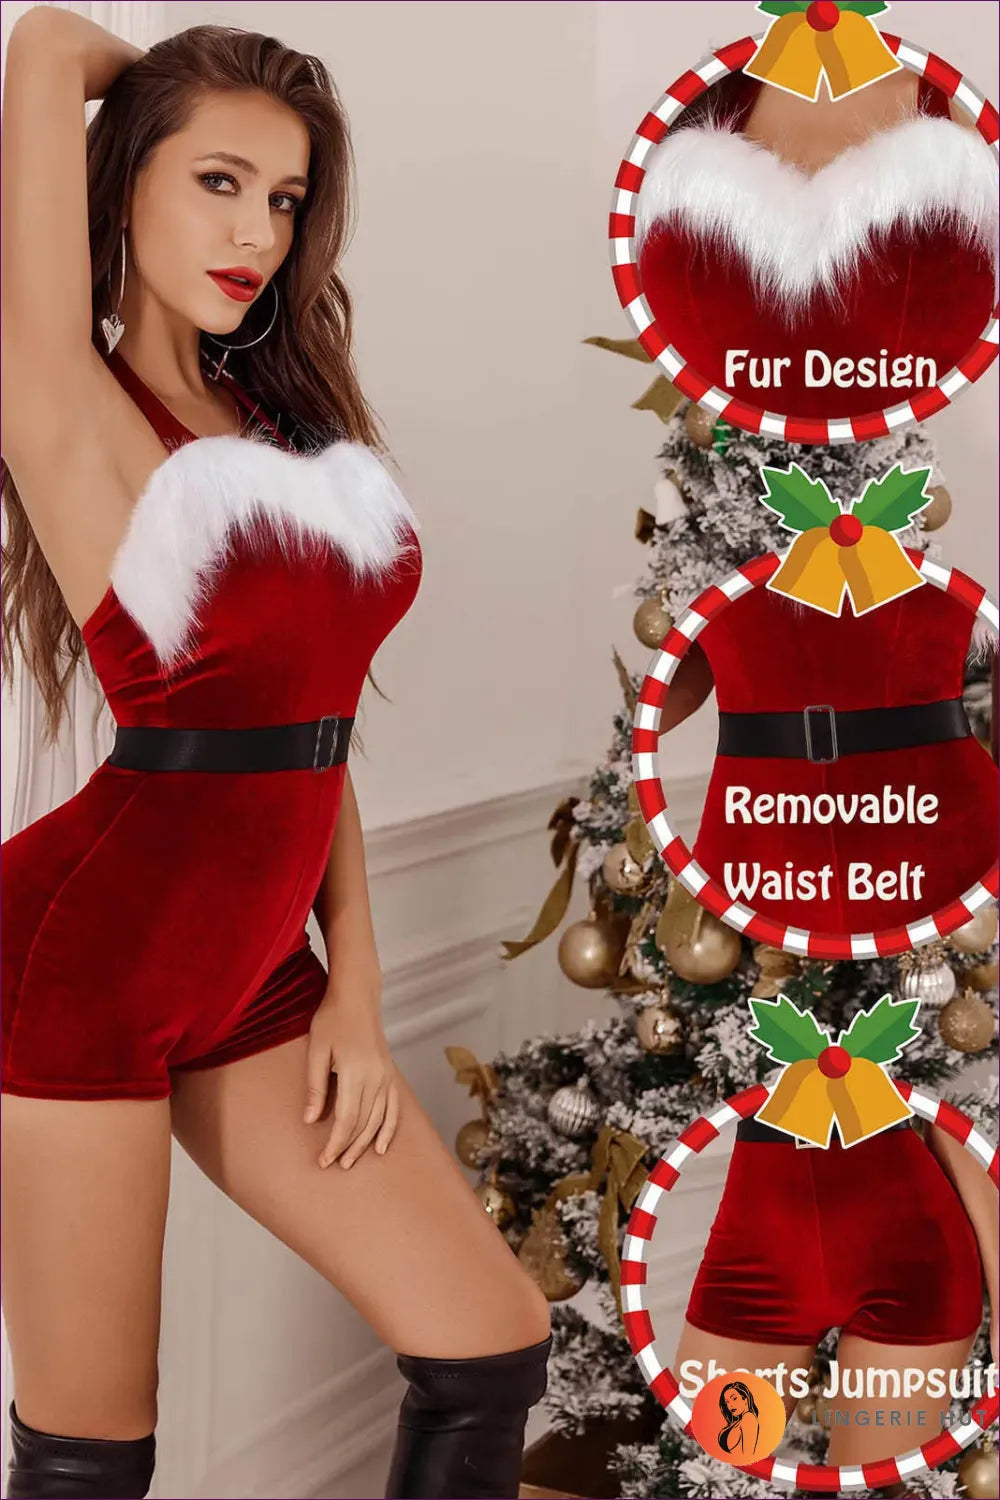 Sizzle This Christmas With Lingerie Hut’s Lace Santa Bodysuit. a Velvet Masterpiece a Belt To Flatter Your